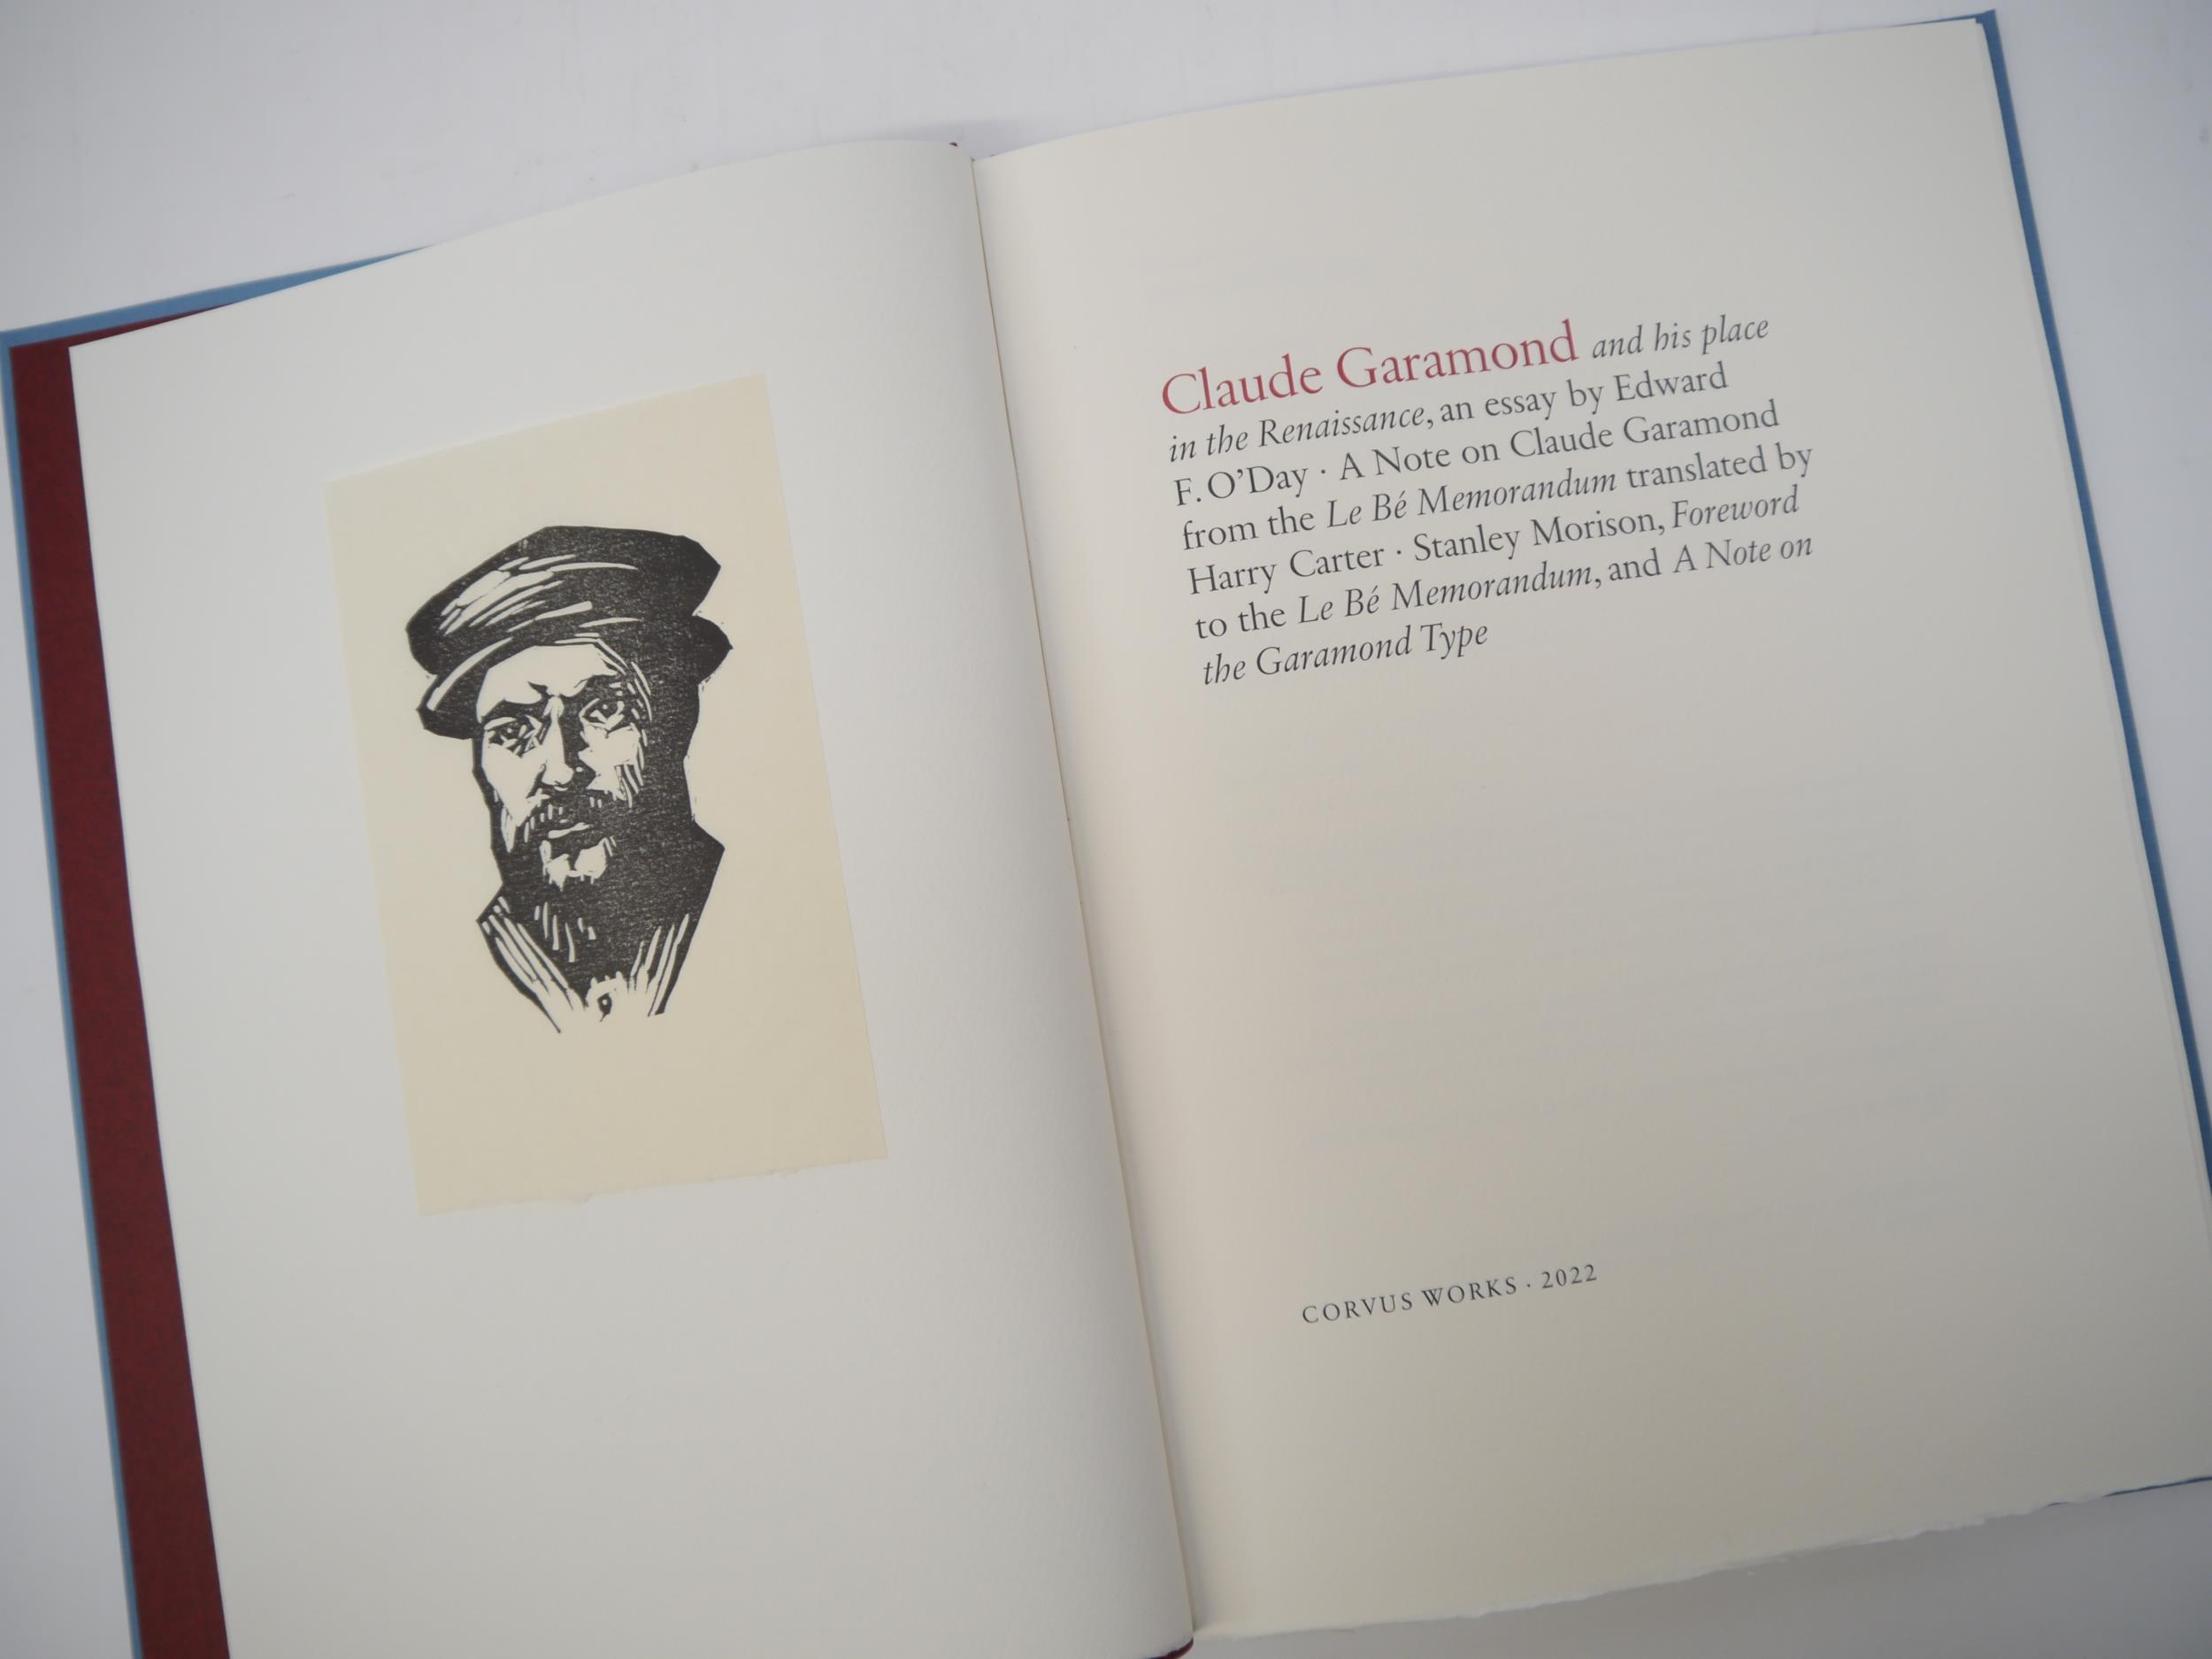 Claude Garamond; Edward F. O'Day, Christopher Wakeling (Introduction) and others: 'Claude Garamond - Image 2 of 3